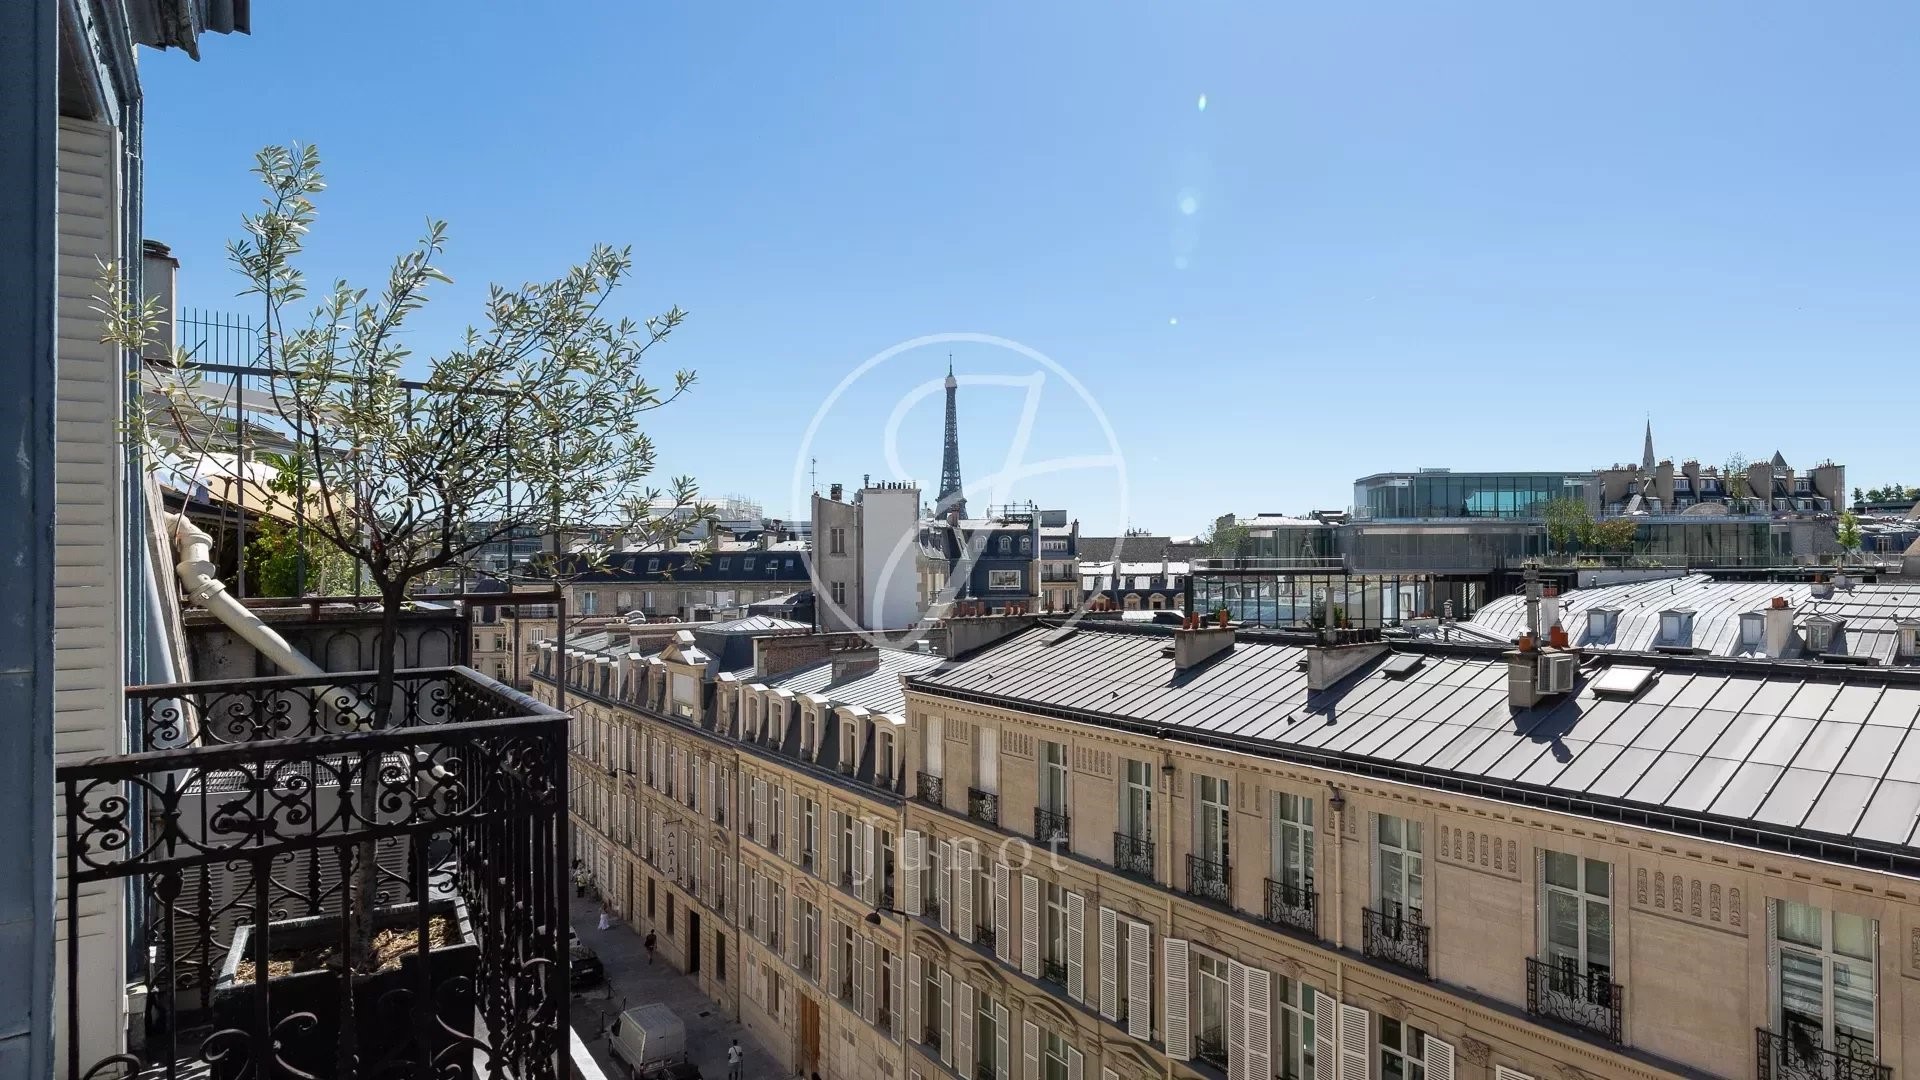 Paris VIIIe - Avenue Montaigne : a Luxury Residence/Apartment for